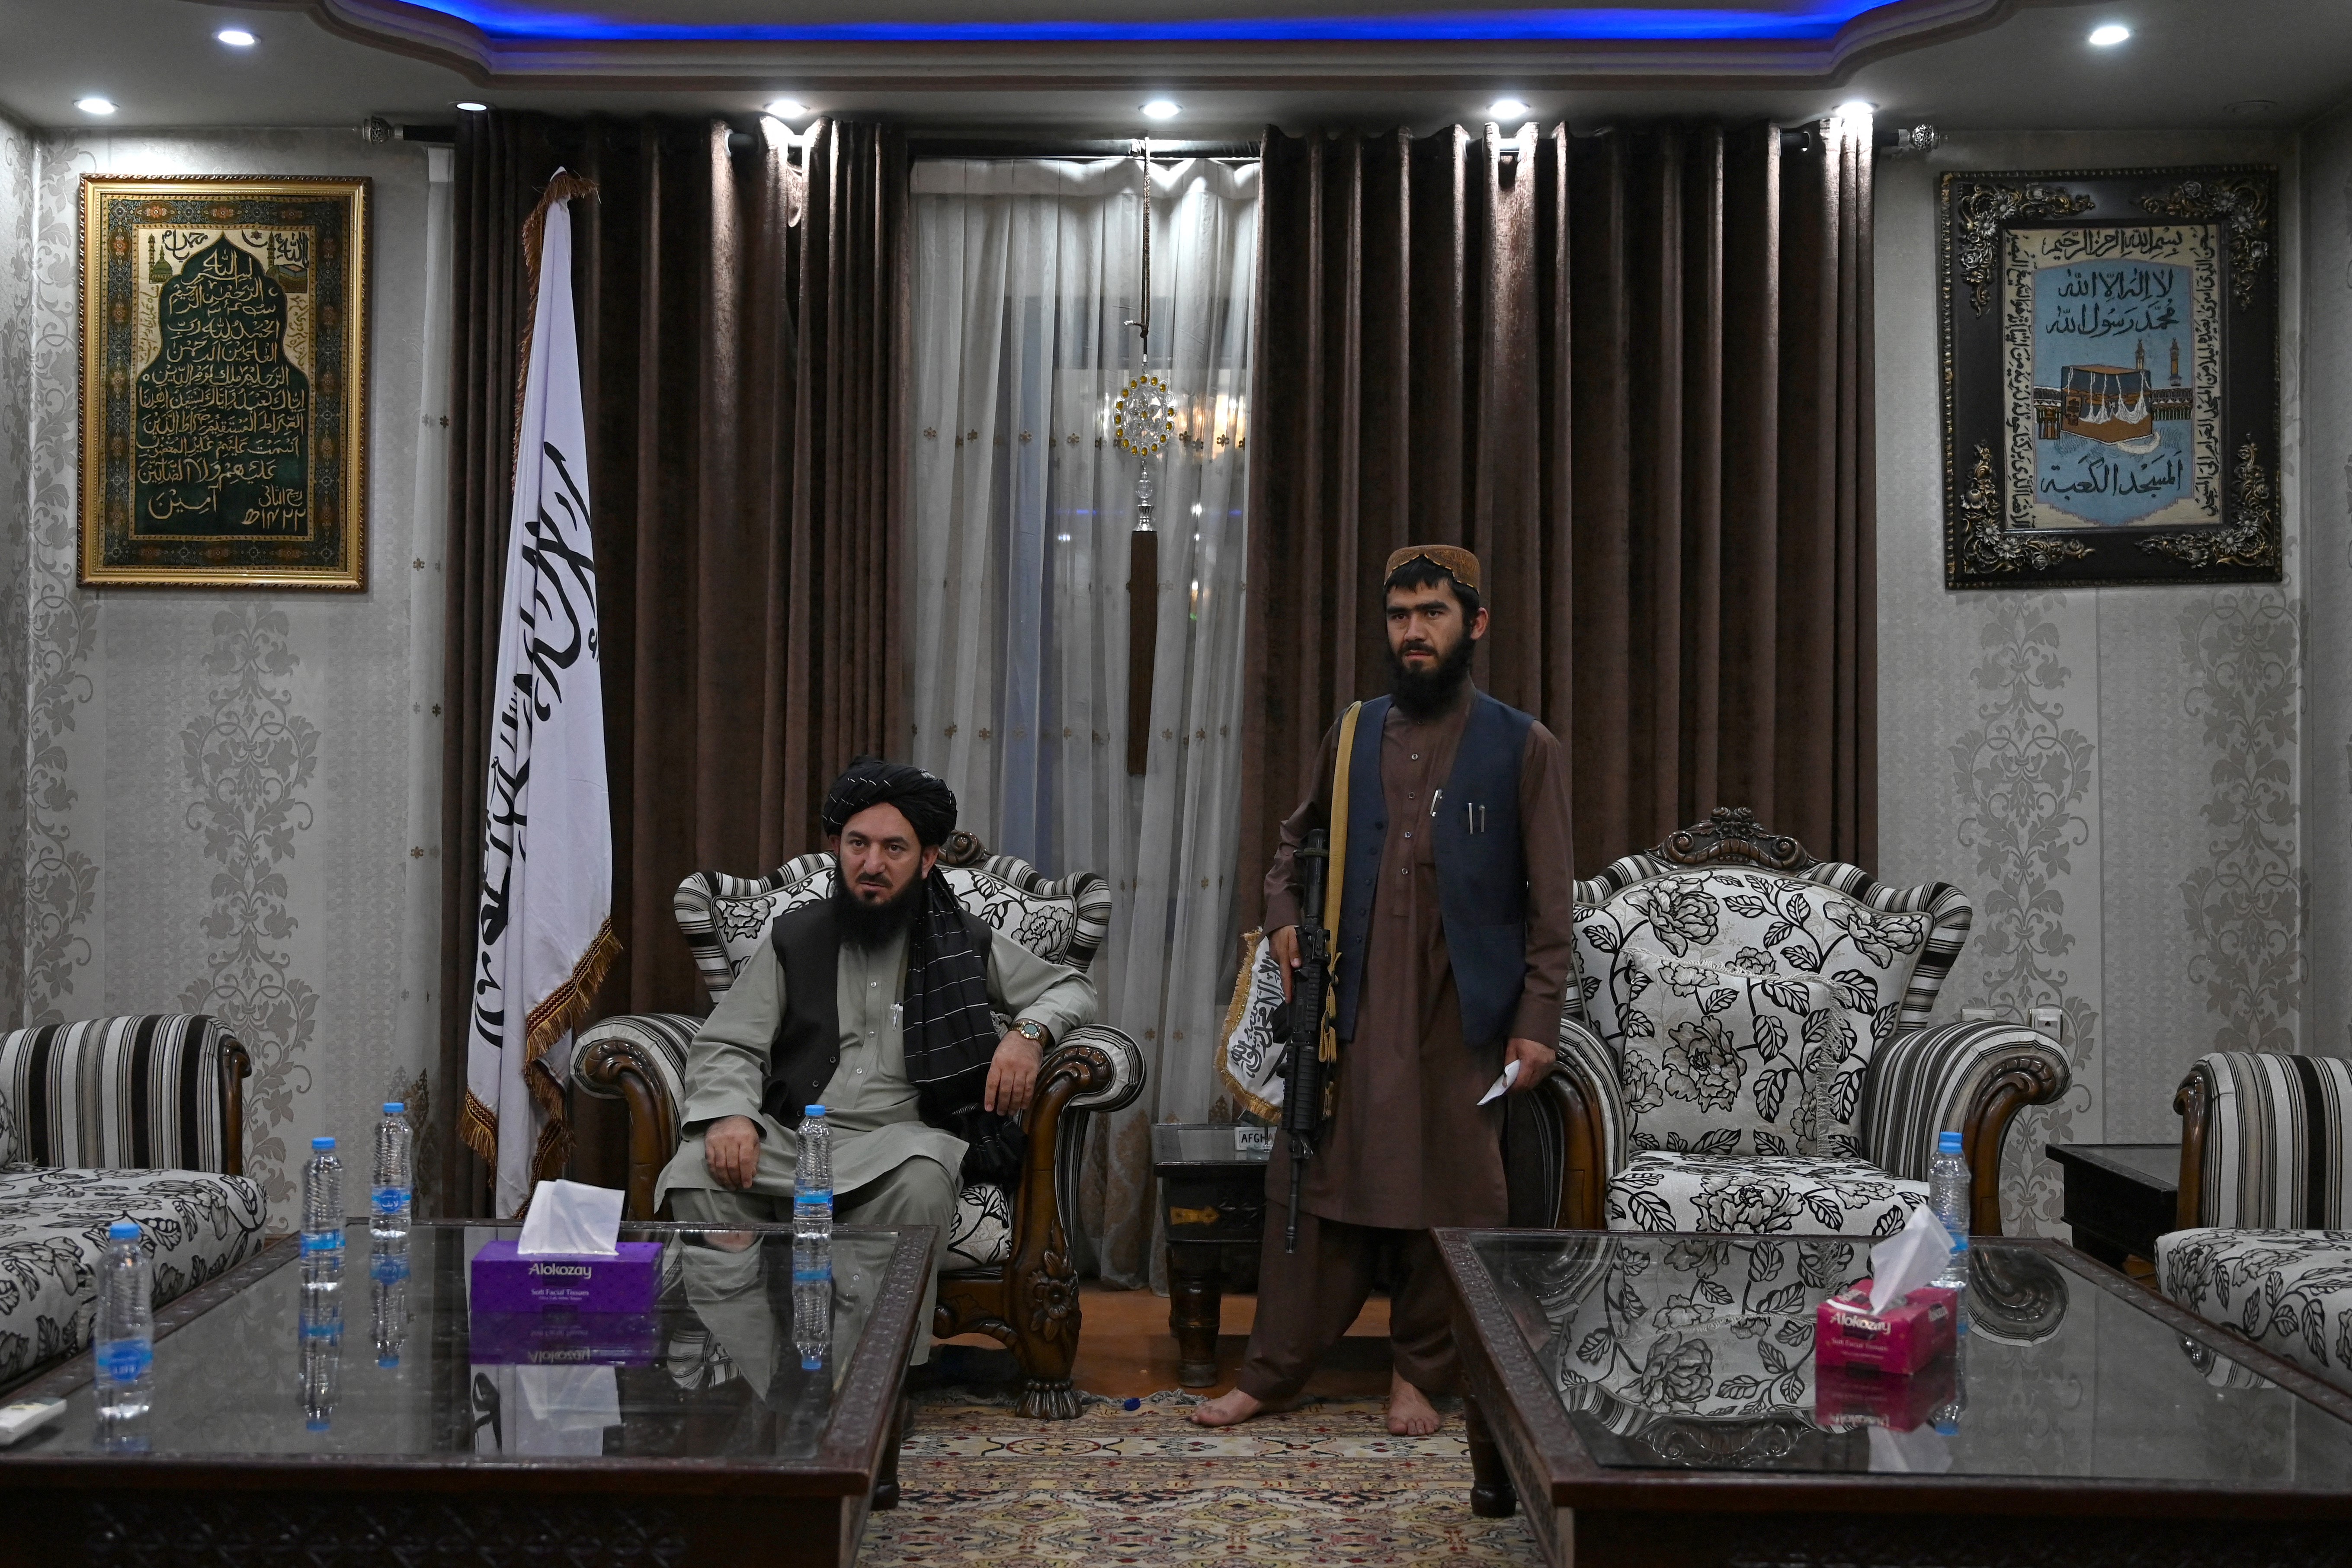 Qari Salahuddin Ayoubi, a la izquierda, dijo que los talibanes no se acostumbrarán al lujo (Wakil KOHSAR / AFP) 